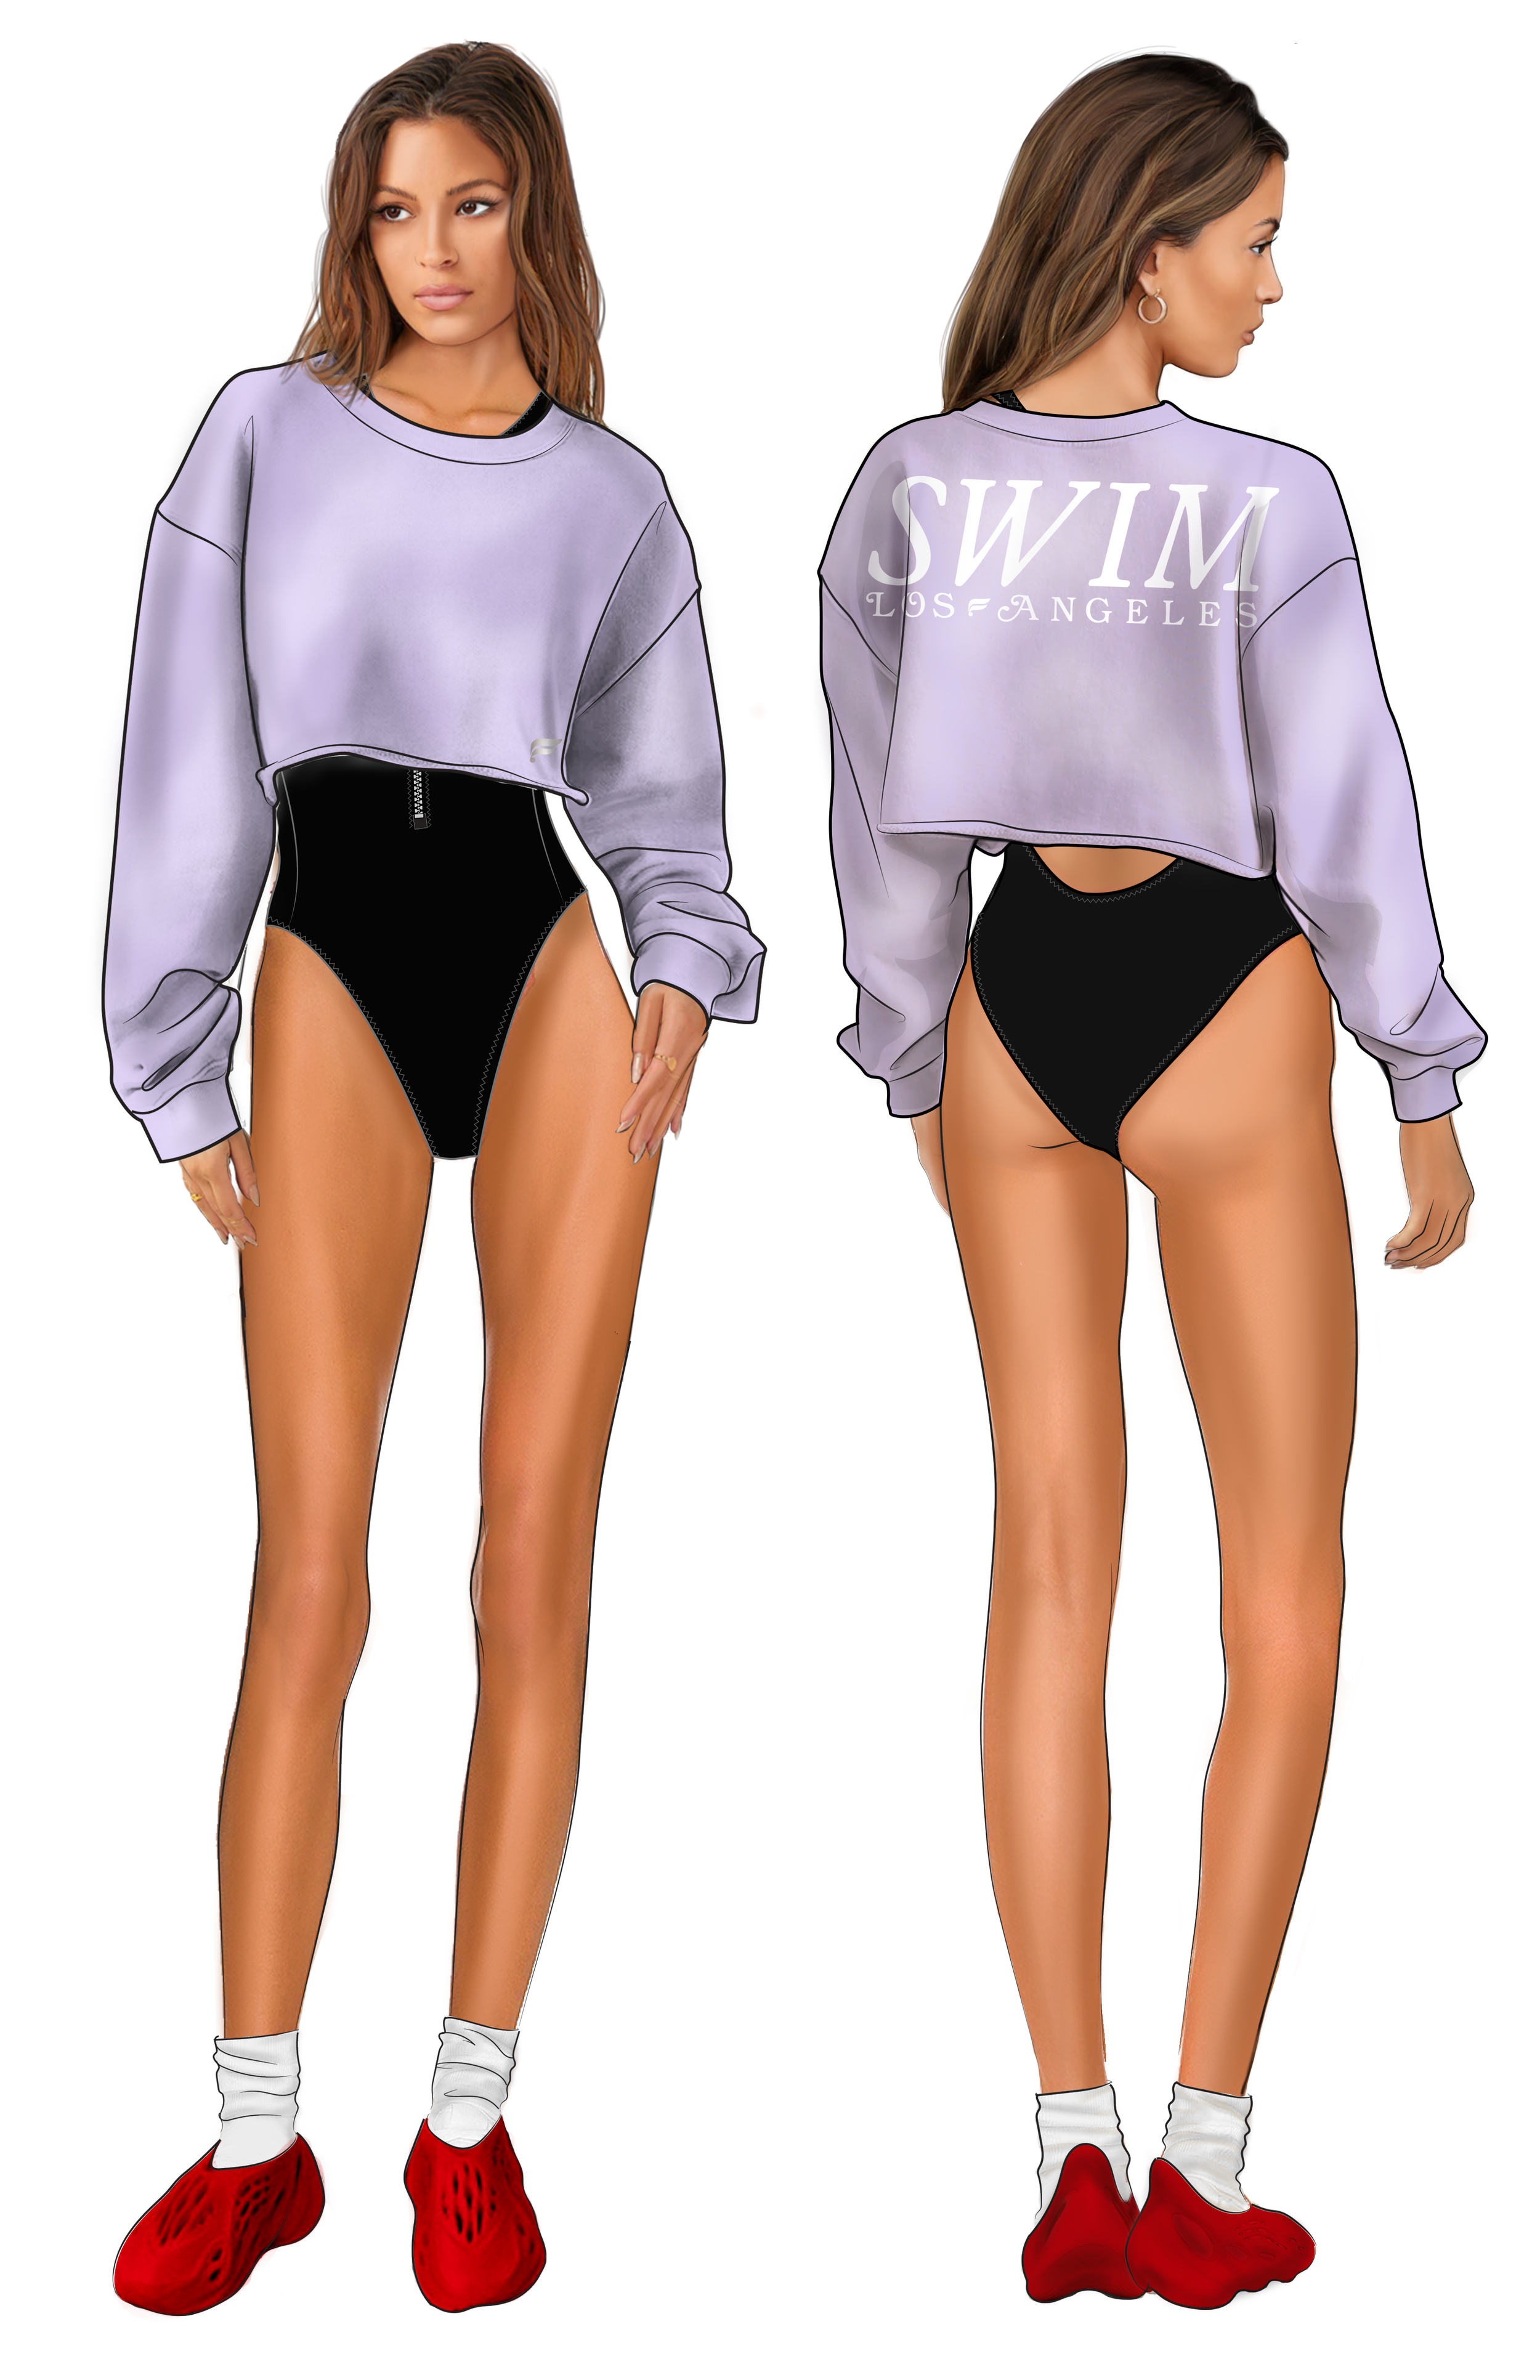 swim 4_black _sweater.png